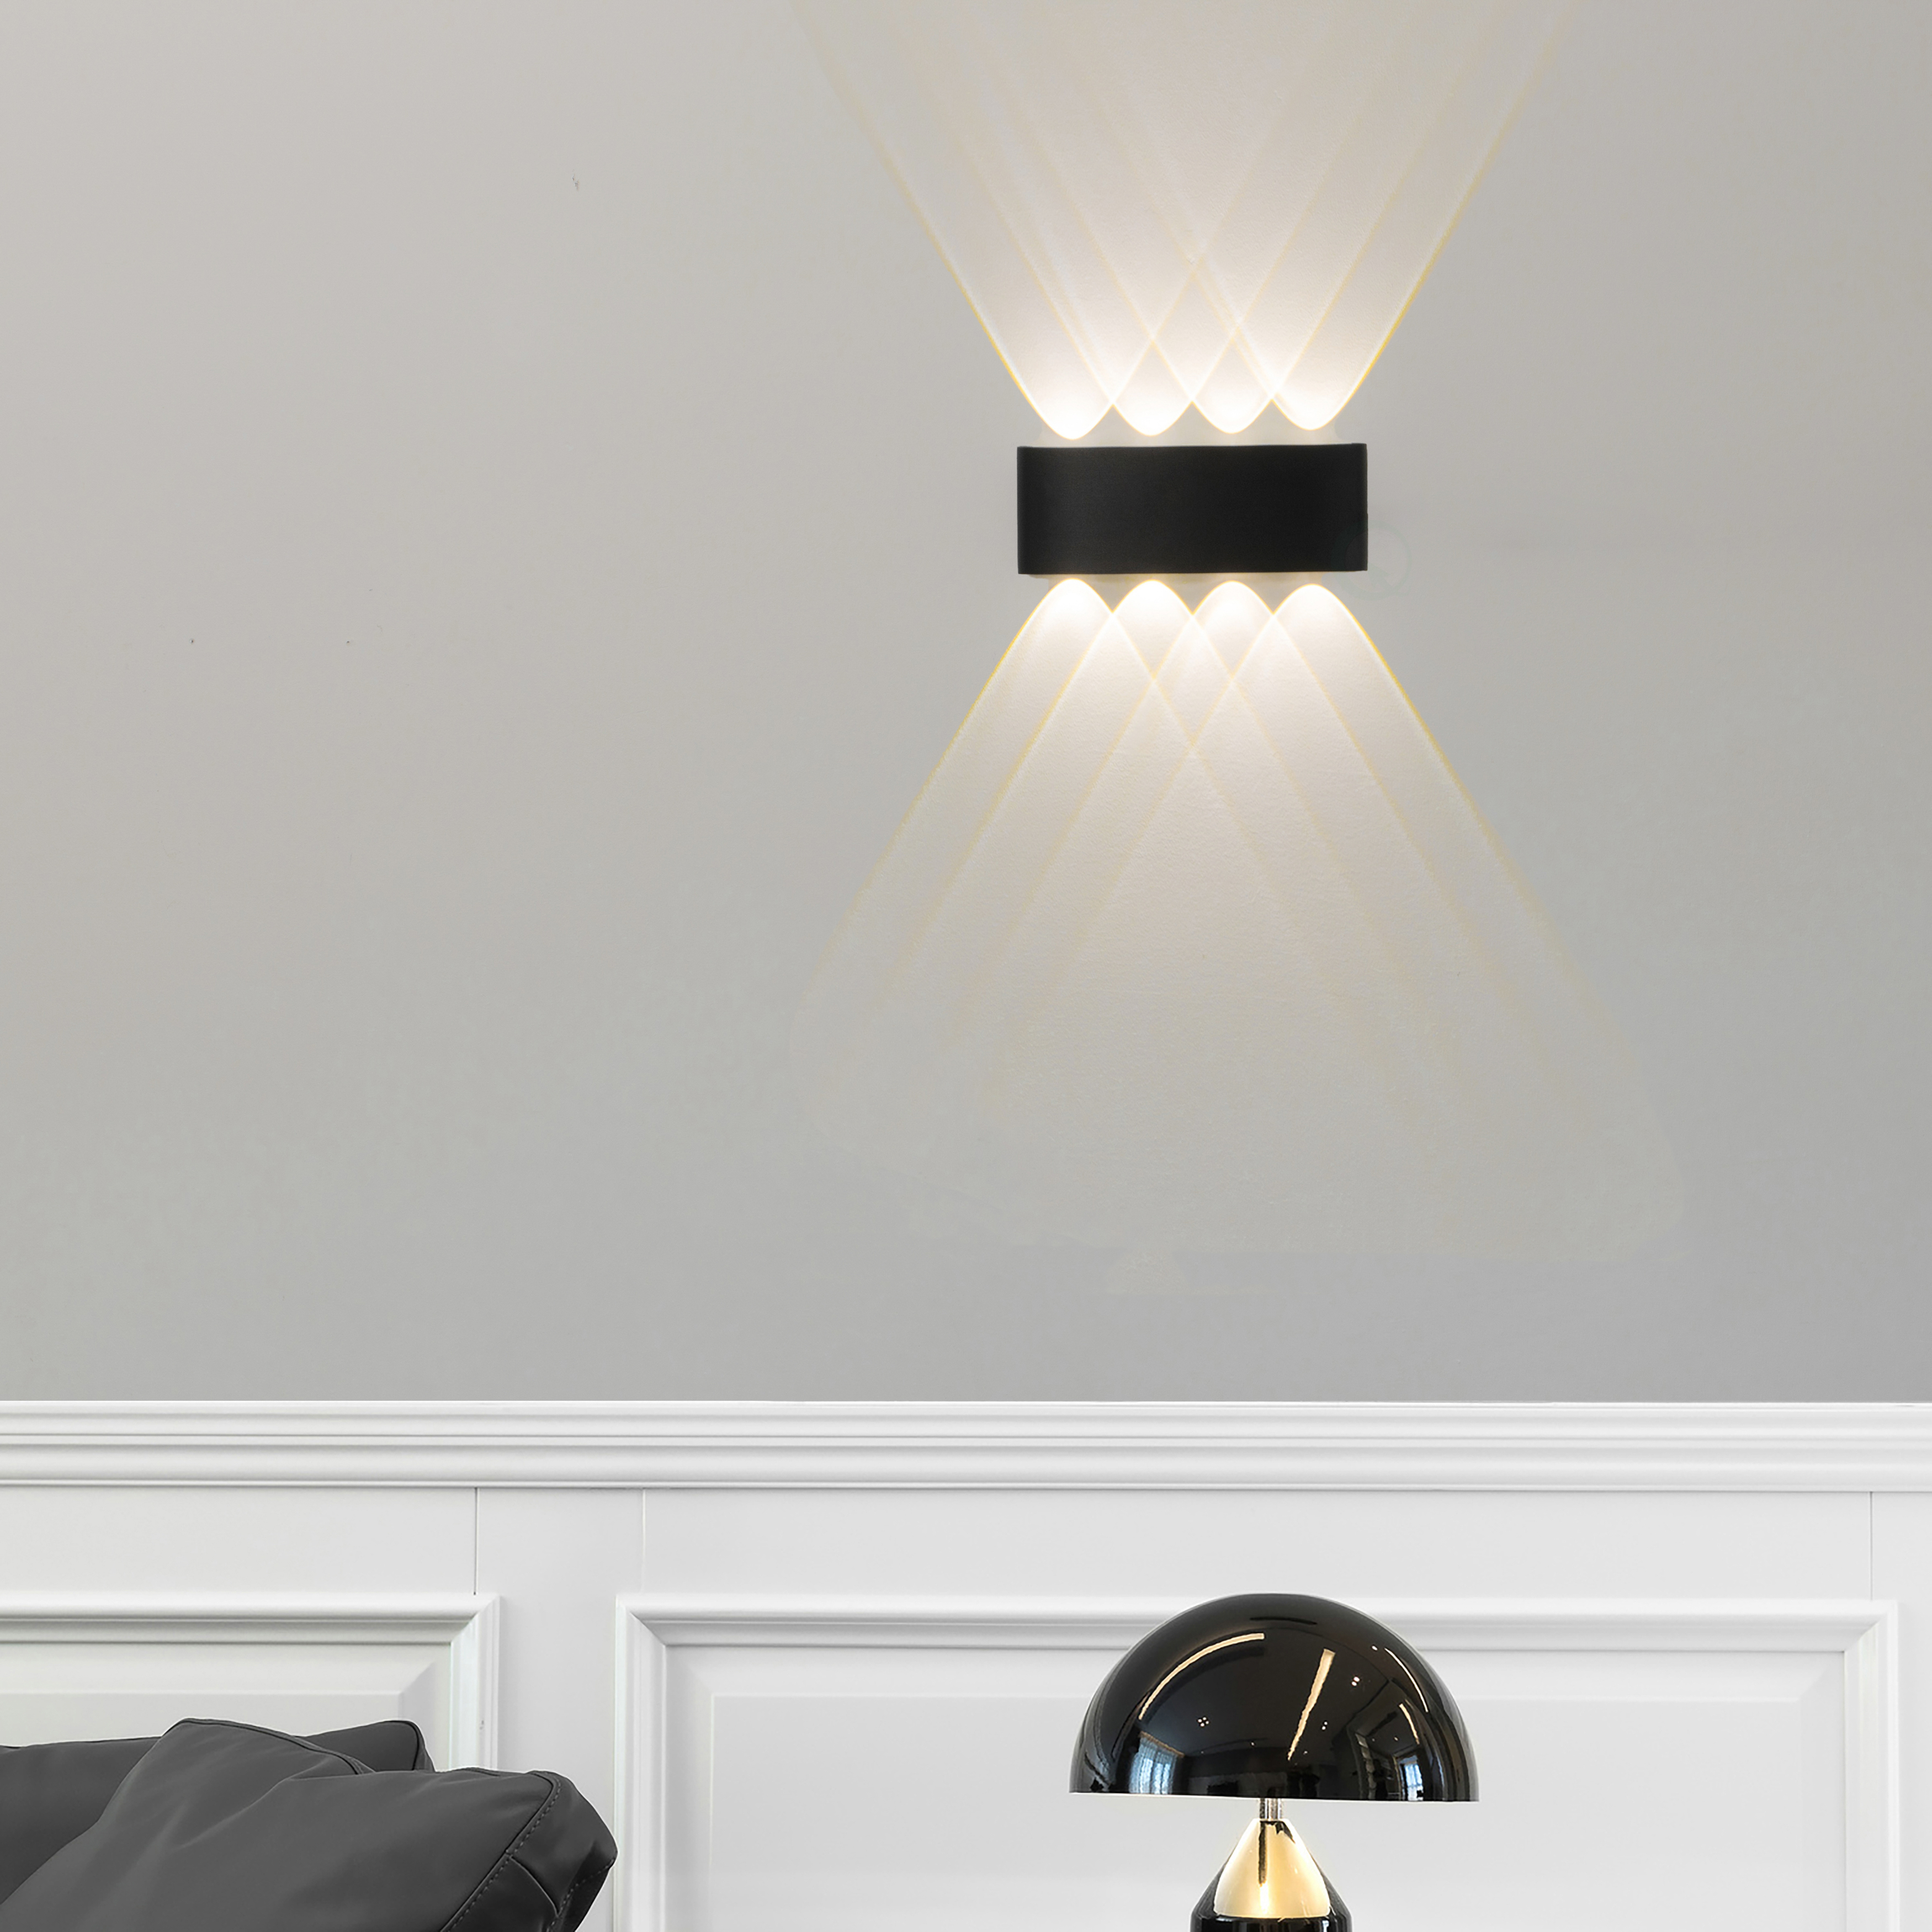 Black Contemporary Decorative Waterproof Aluminum Wall Lamp For Indoors And Outdoors, 8 Watt Cool White 4000K - Black 8Watt Set Of 2